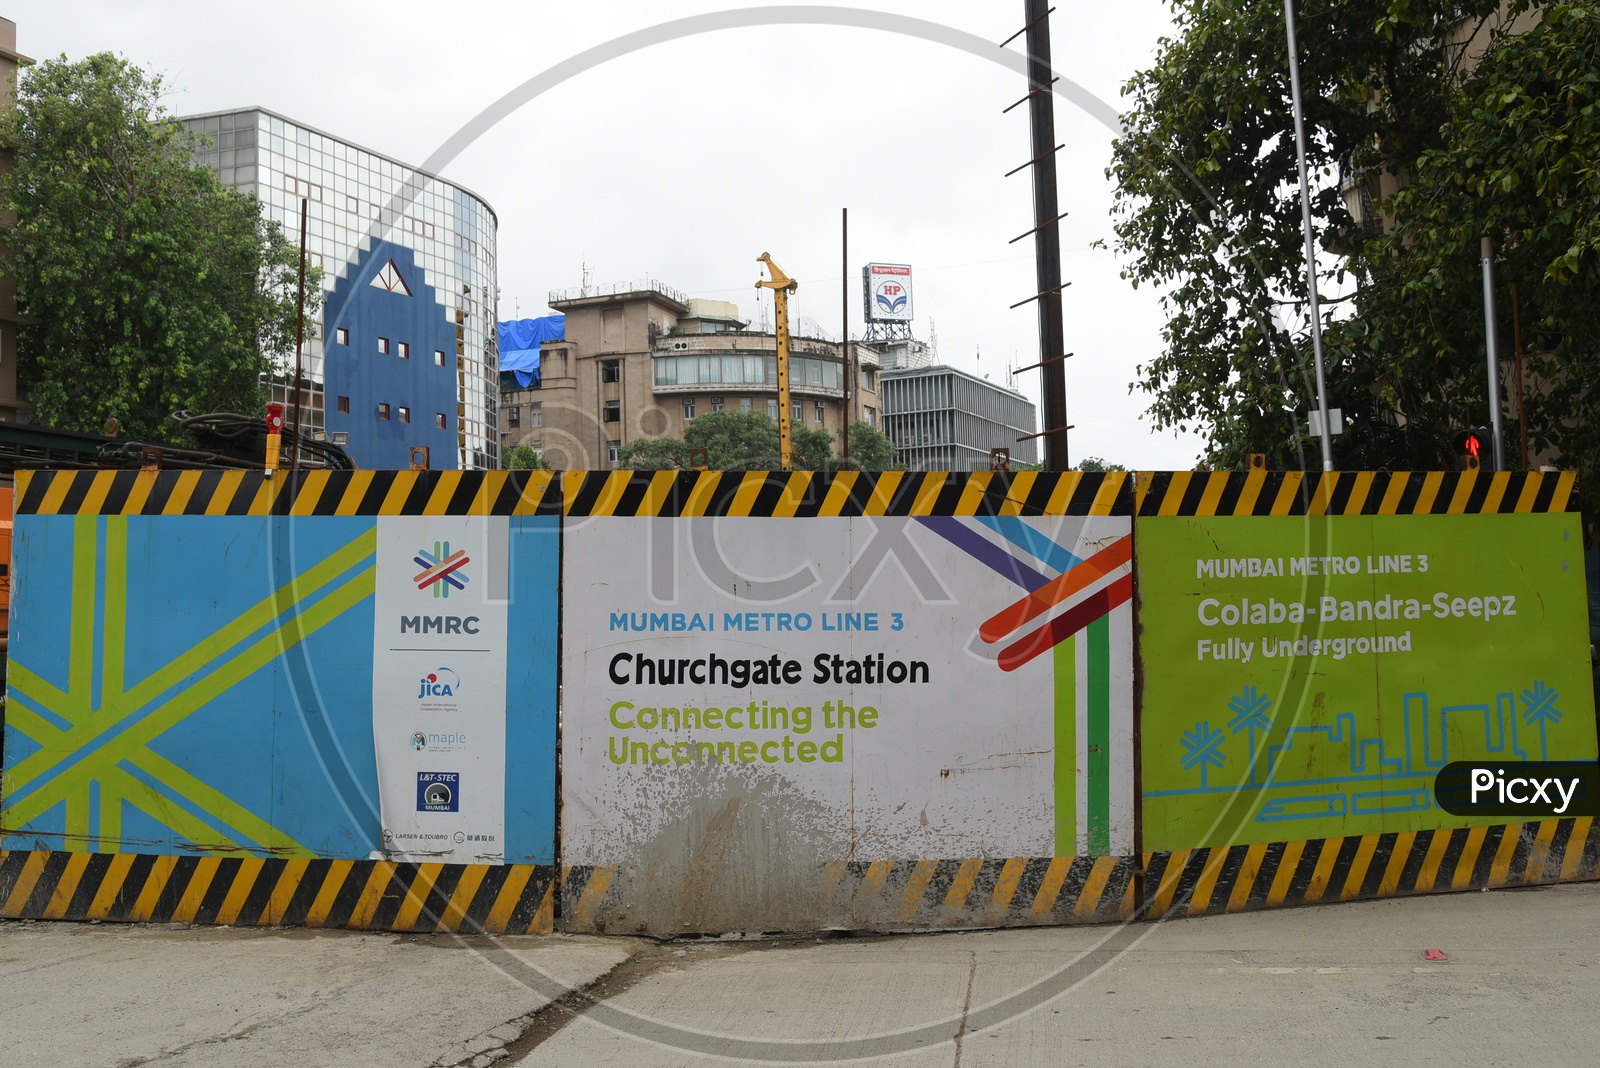 Mumbai Metro Line 3 - Churchgate Station - Under Construction